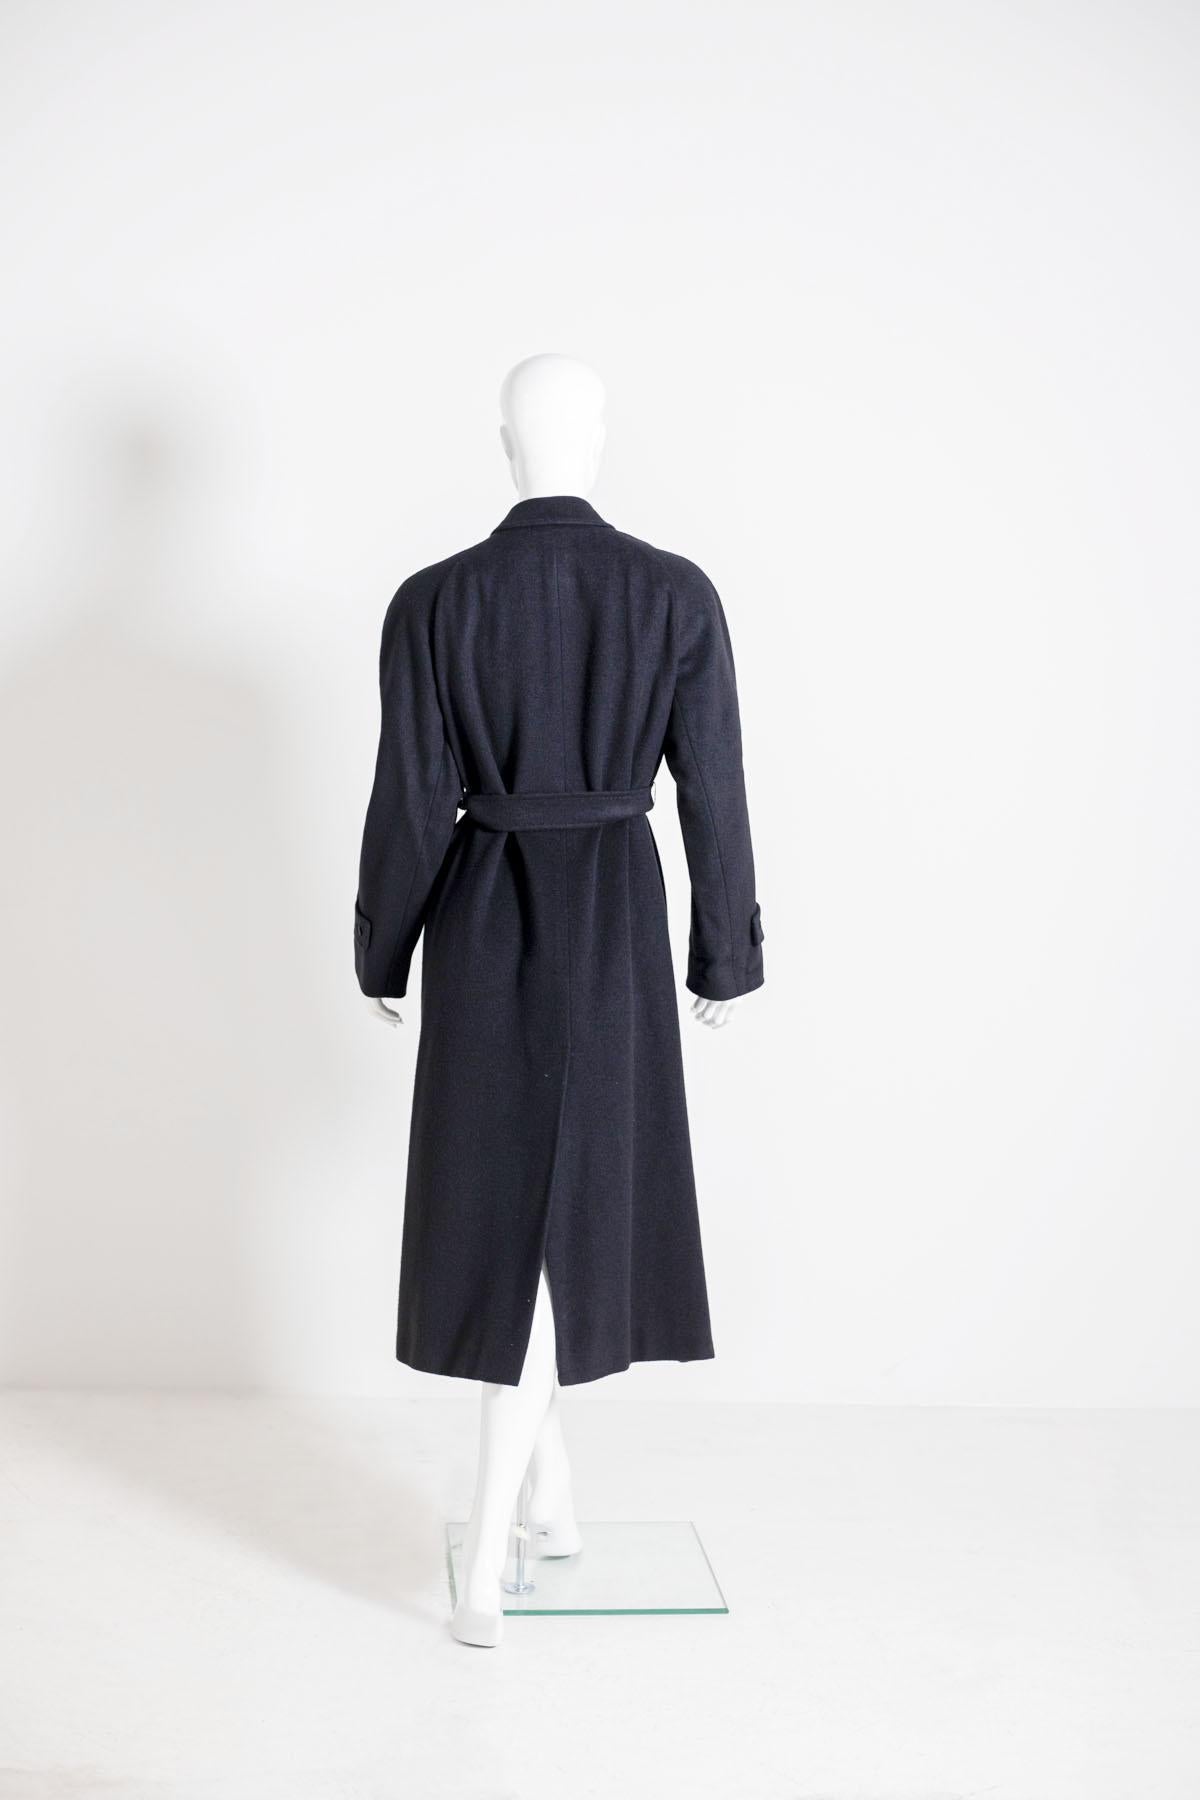 Aquascutum Women's Coat 1990s Black-Colored For Sale 3